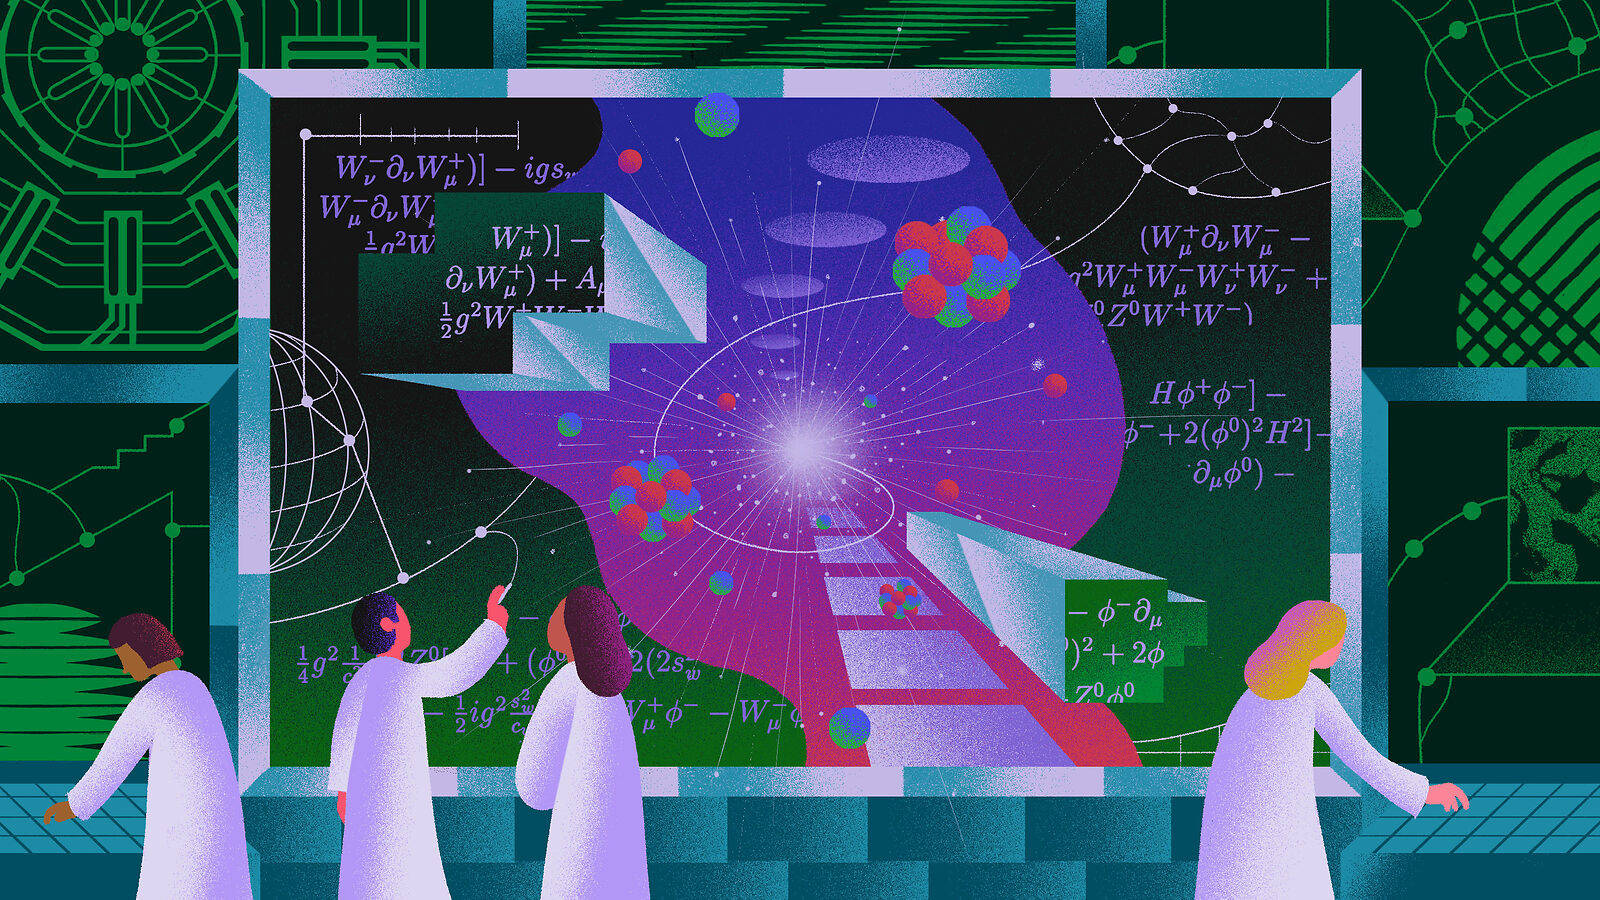 Top 999+ Science Desktop Wallpaper Full HD, 4K✅Free to Use